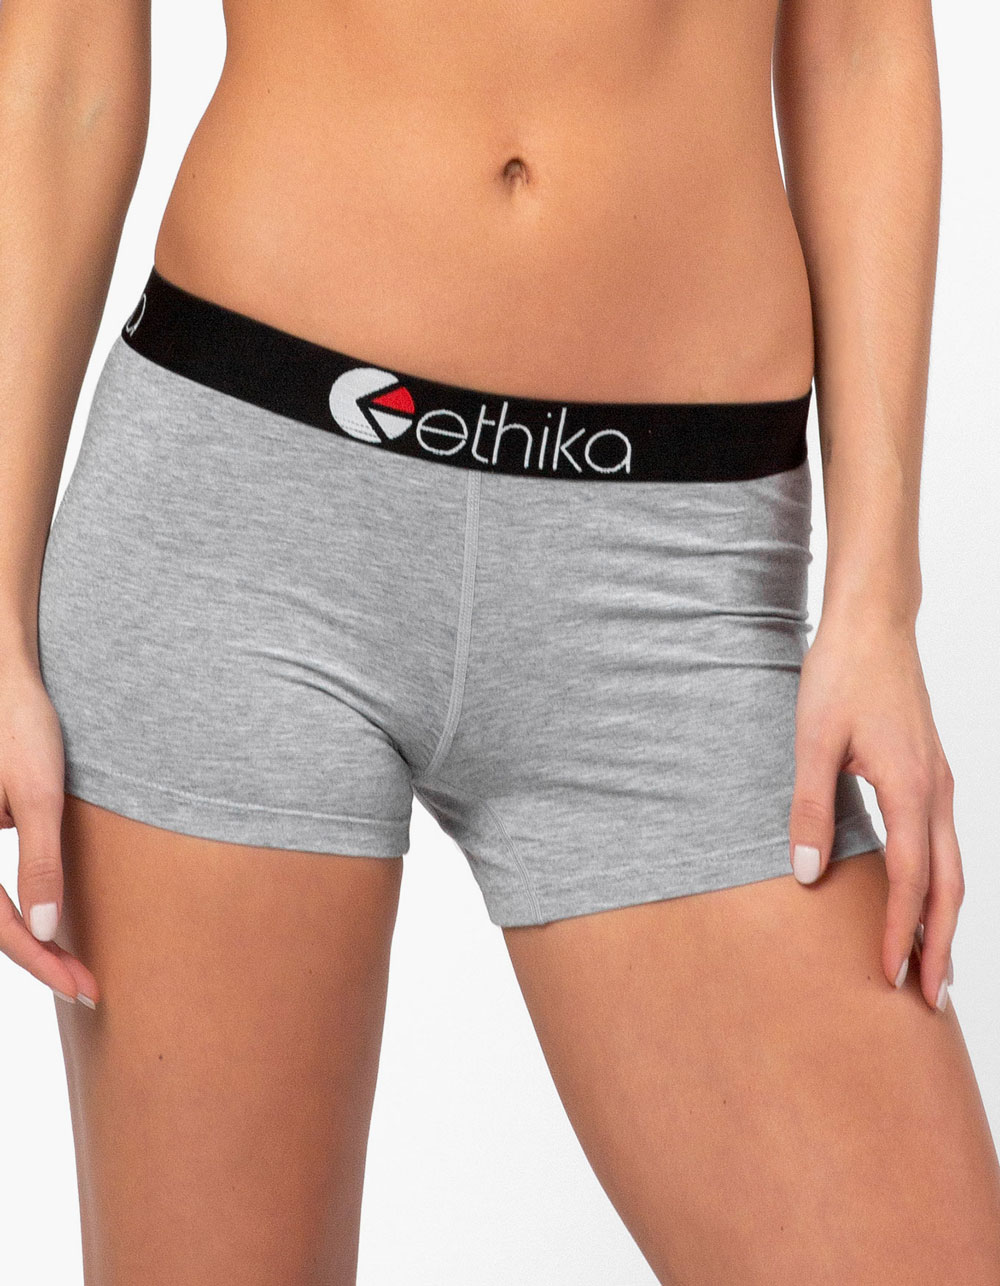 Ethika Underwear Grey L Canada Sale - Ethika Outlet Store